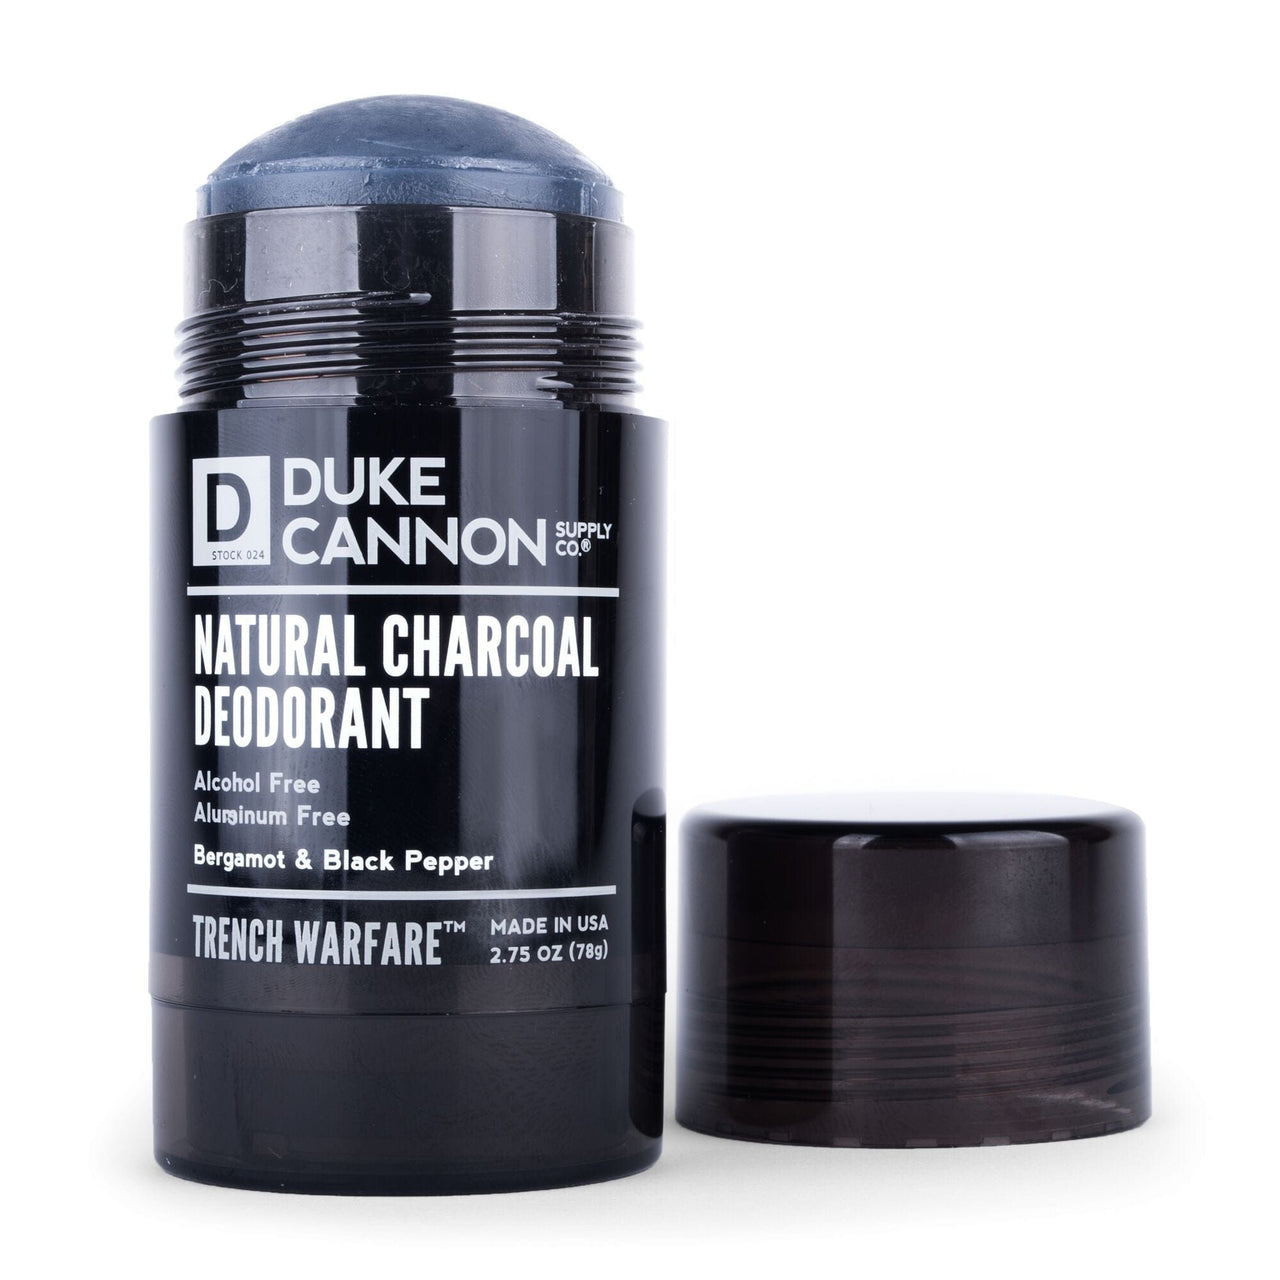 Duke Cannon natural charcoal deodorant